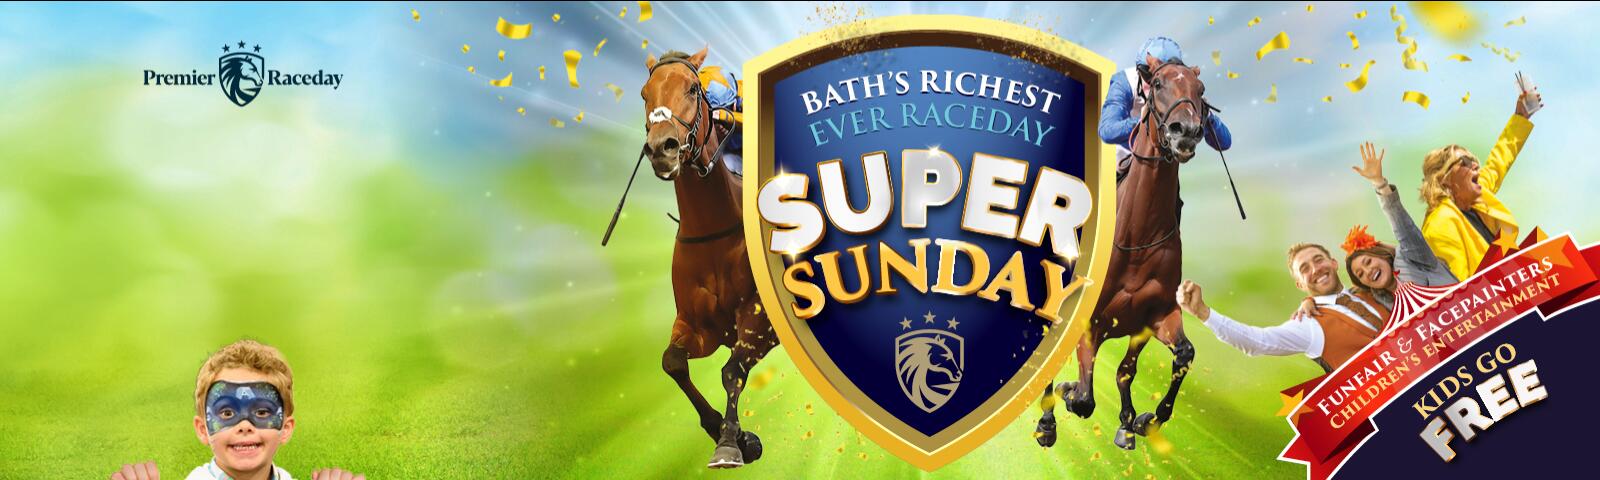 Super Sunday at Bath Racecourse